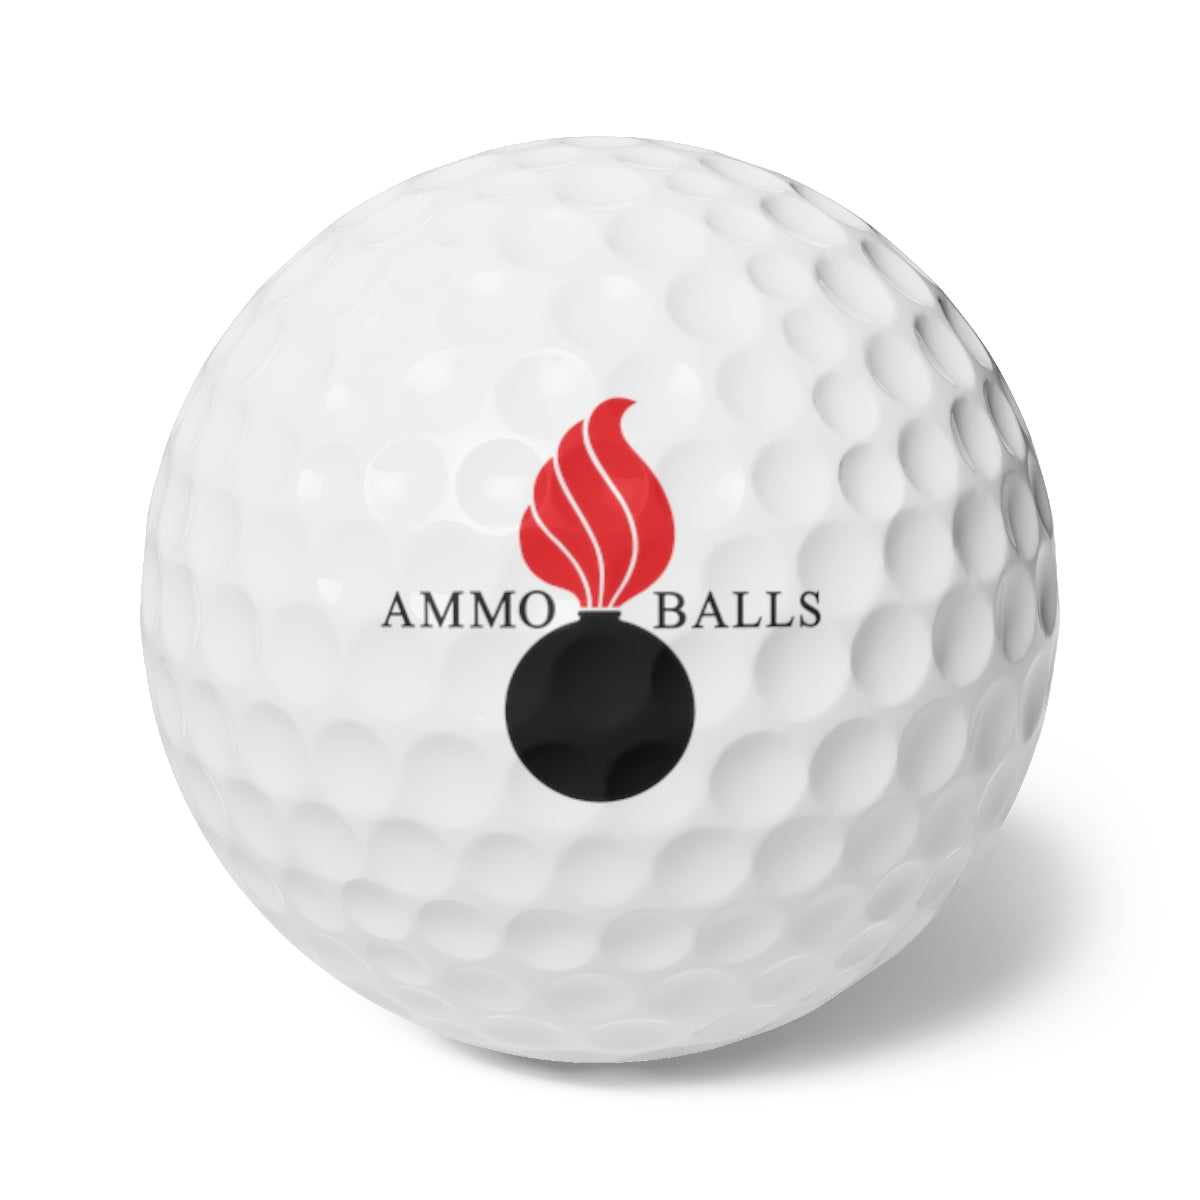 Basic USAF AMMO Red and Black Pisspot AMMO BALLS Logo Golf Balls, 6pcs